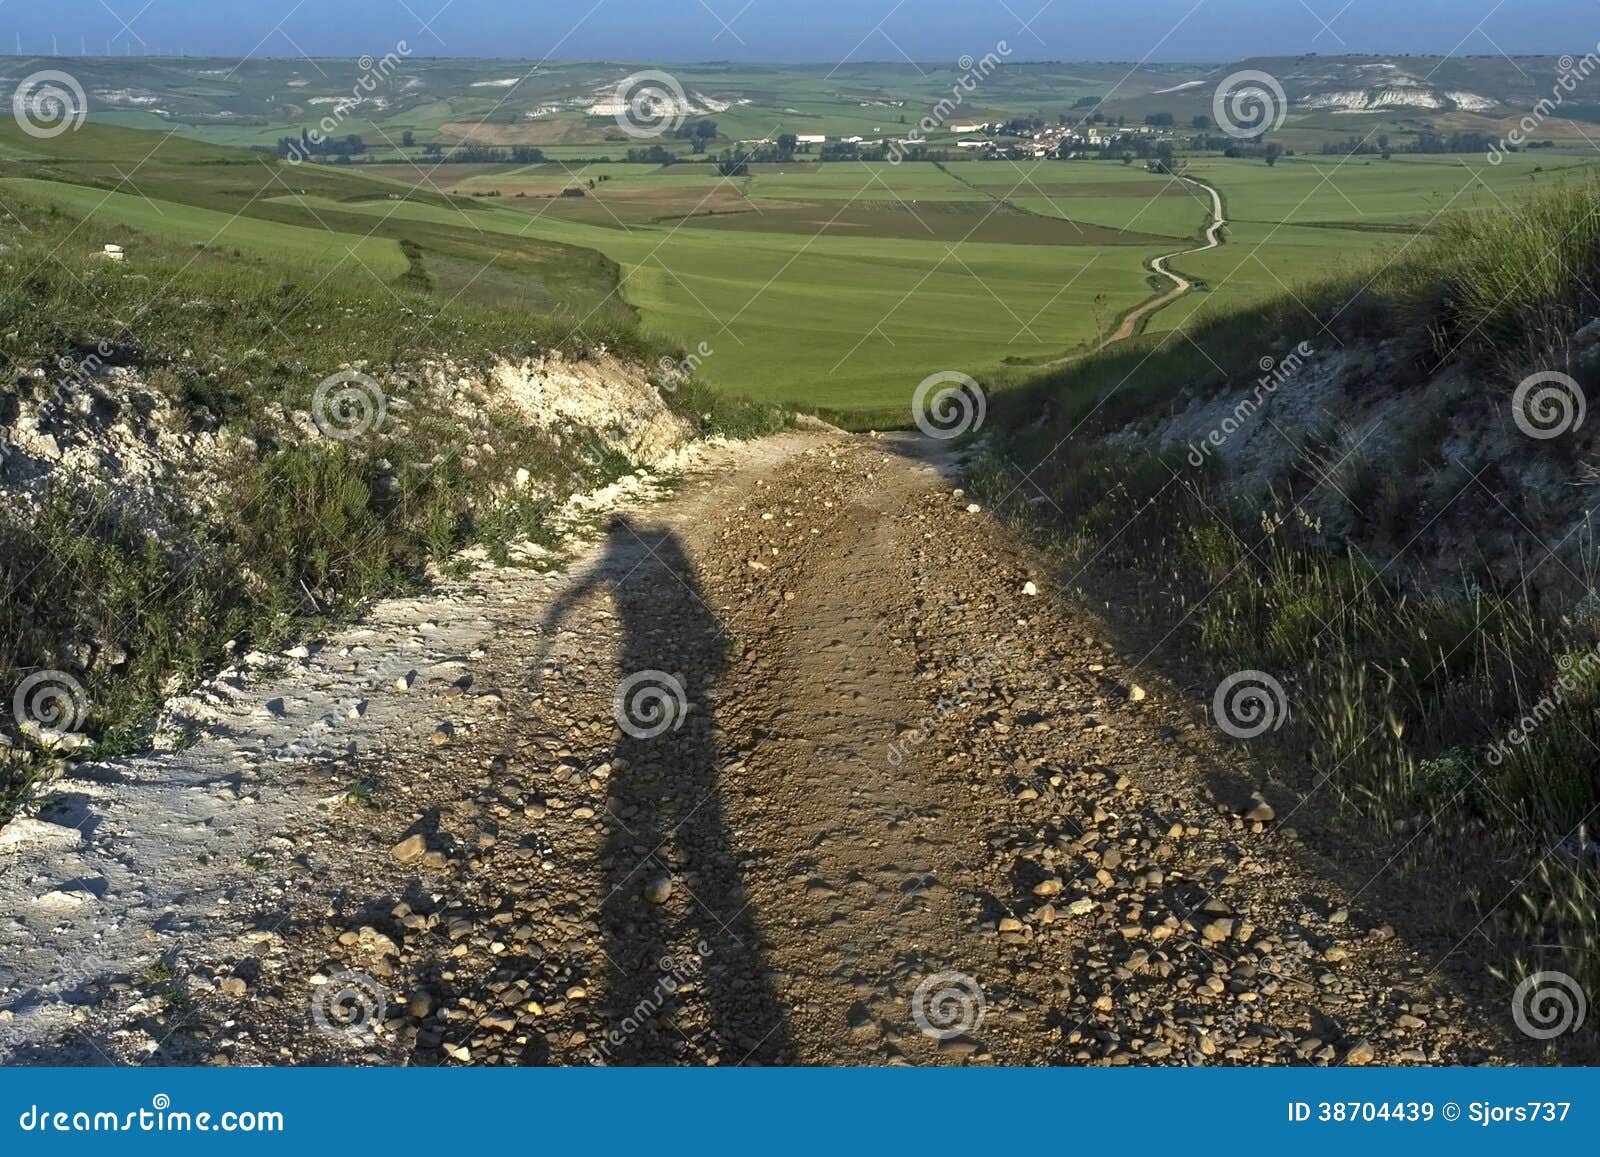 shadow pilgrim, rural landscape, camino frances